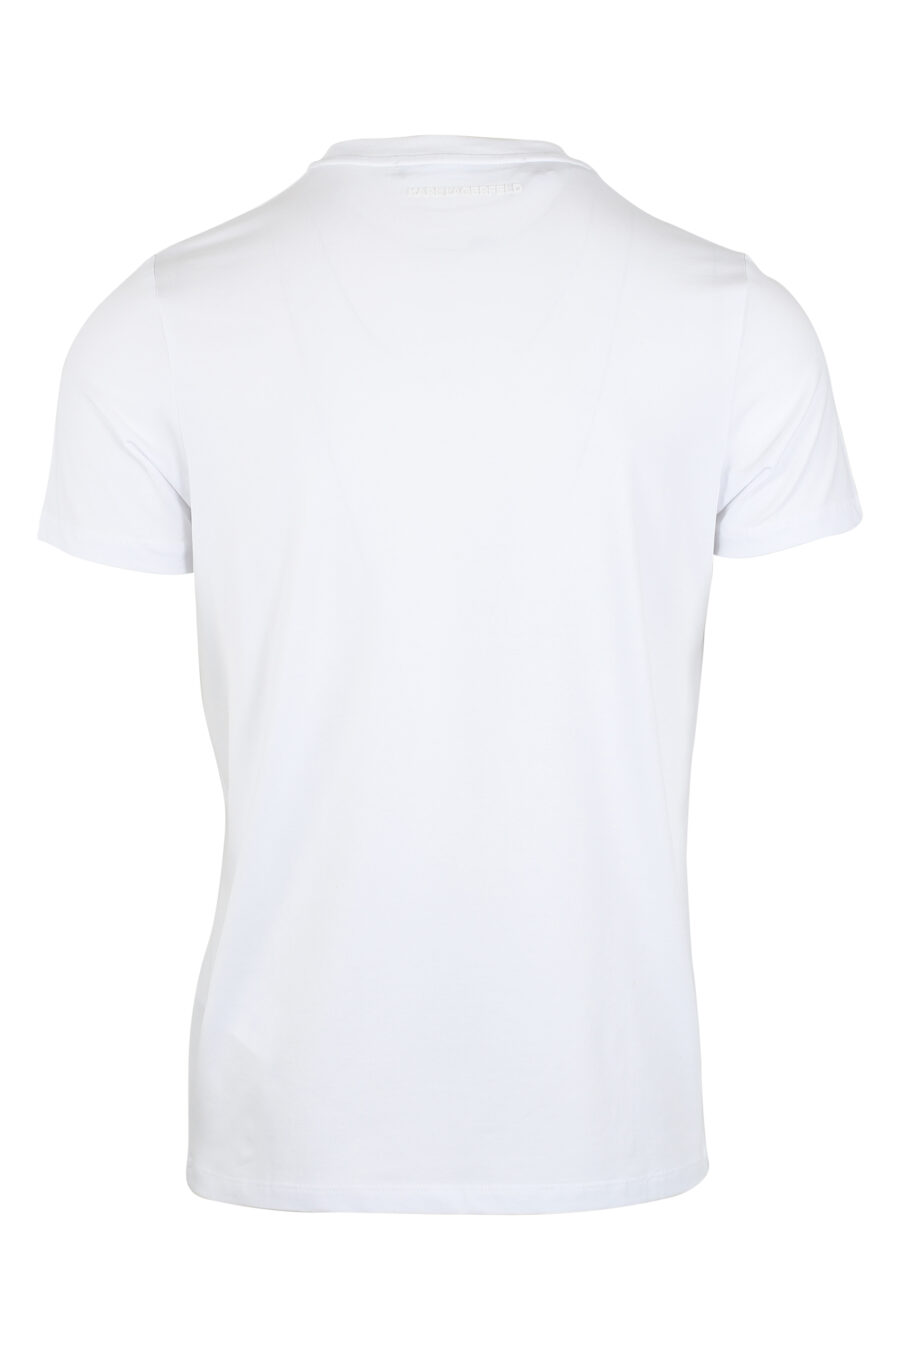 White T-shirt with contrasting black "karl" maxilogo - IMG 9492